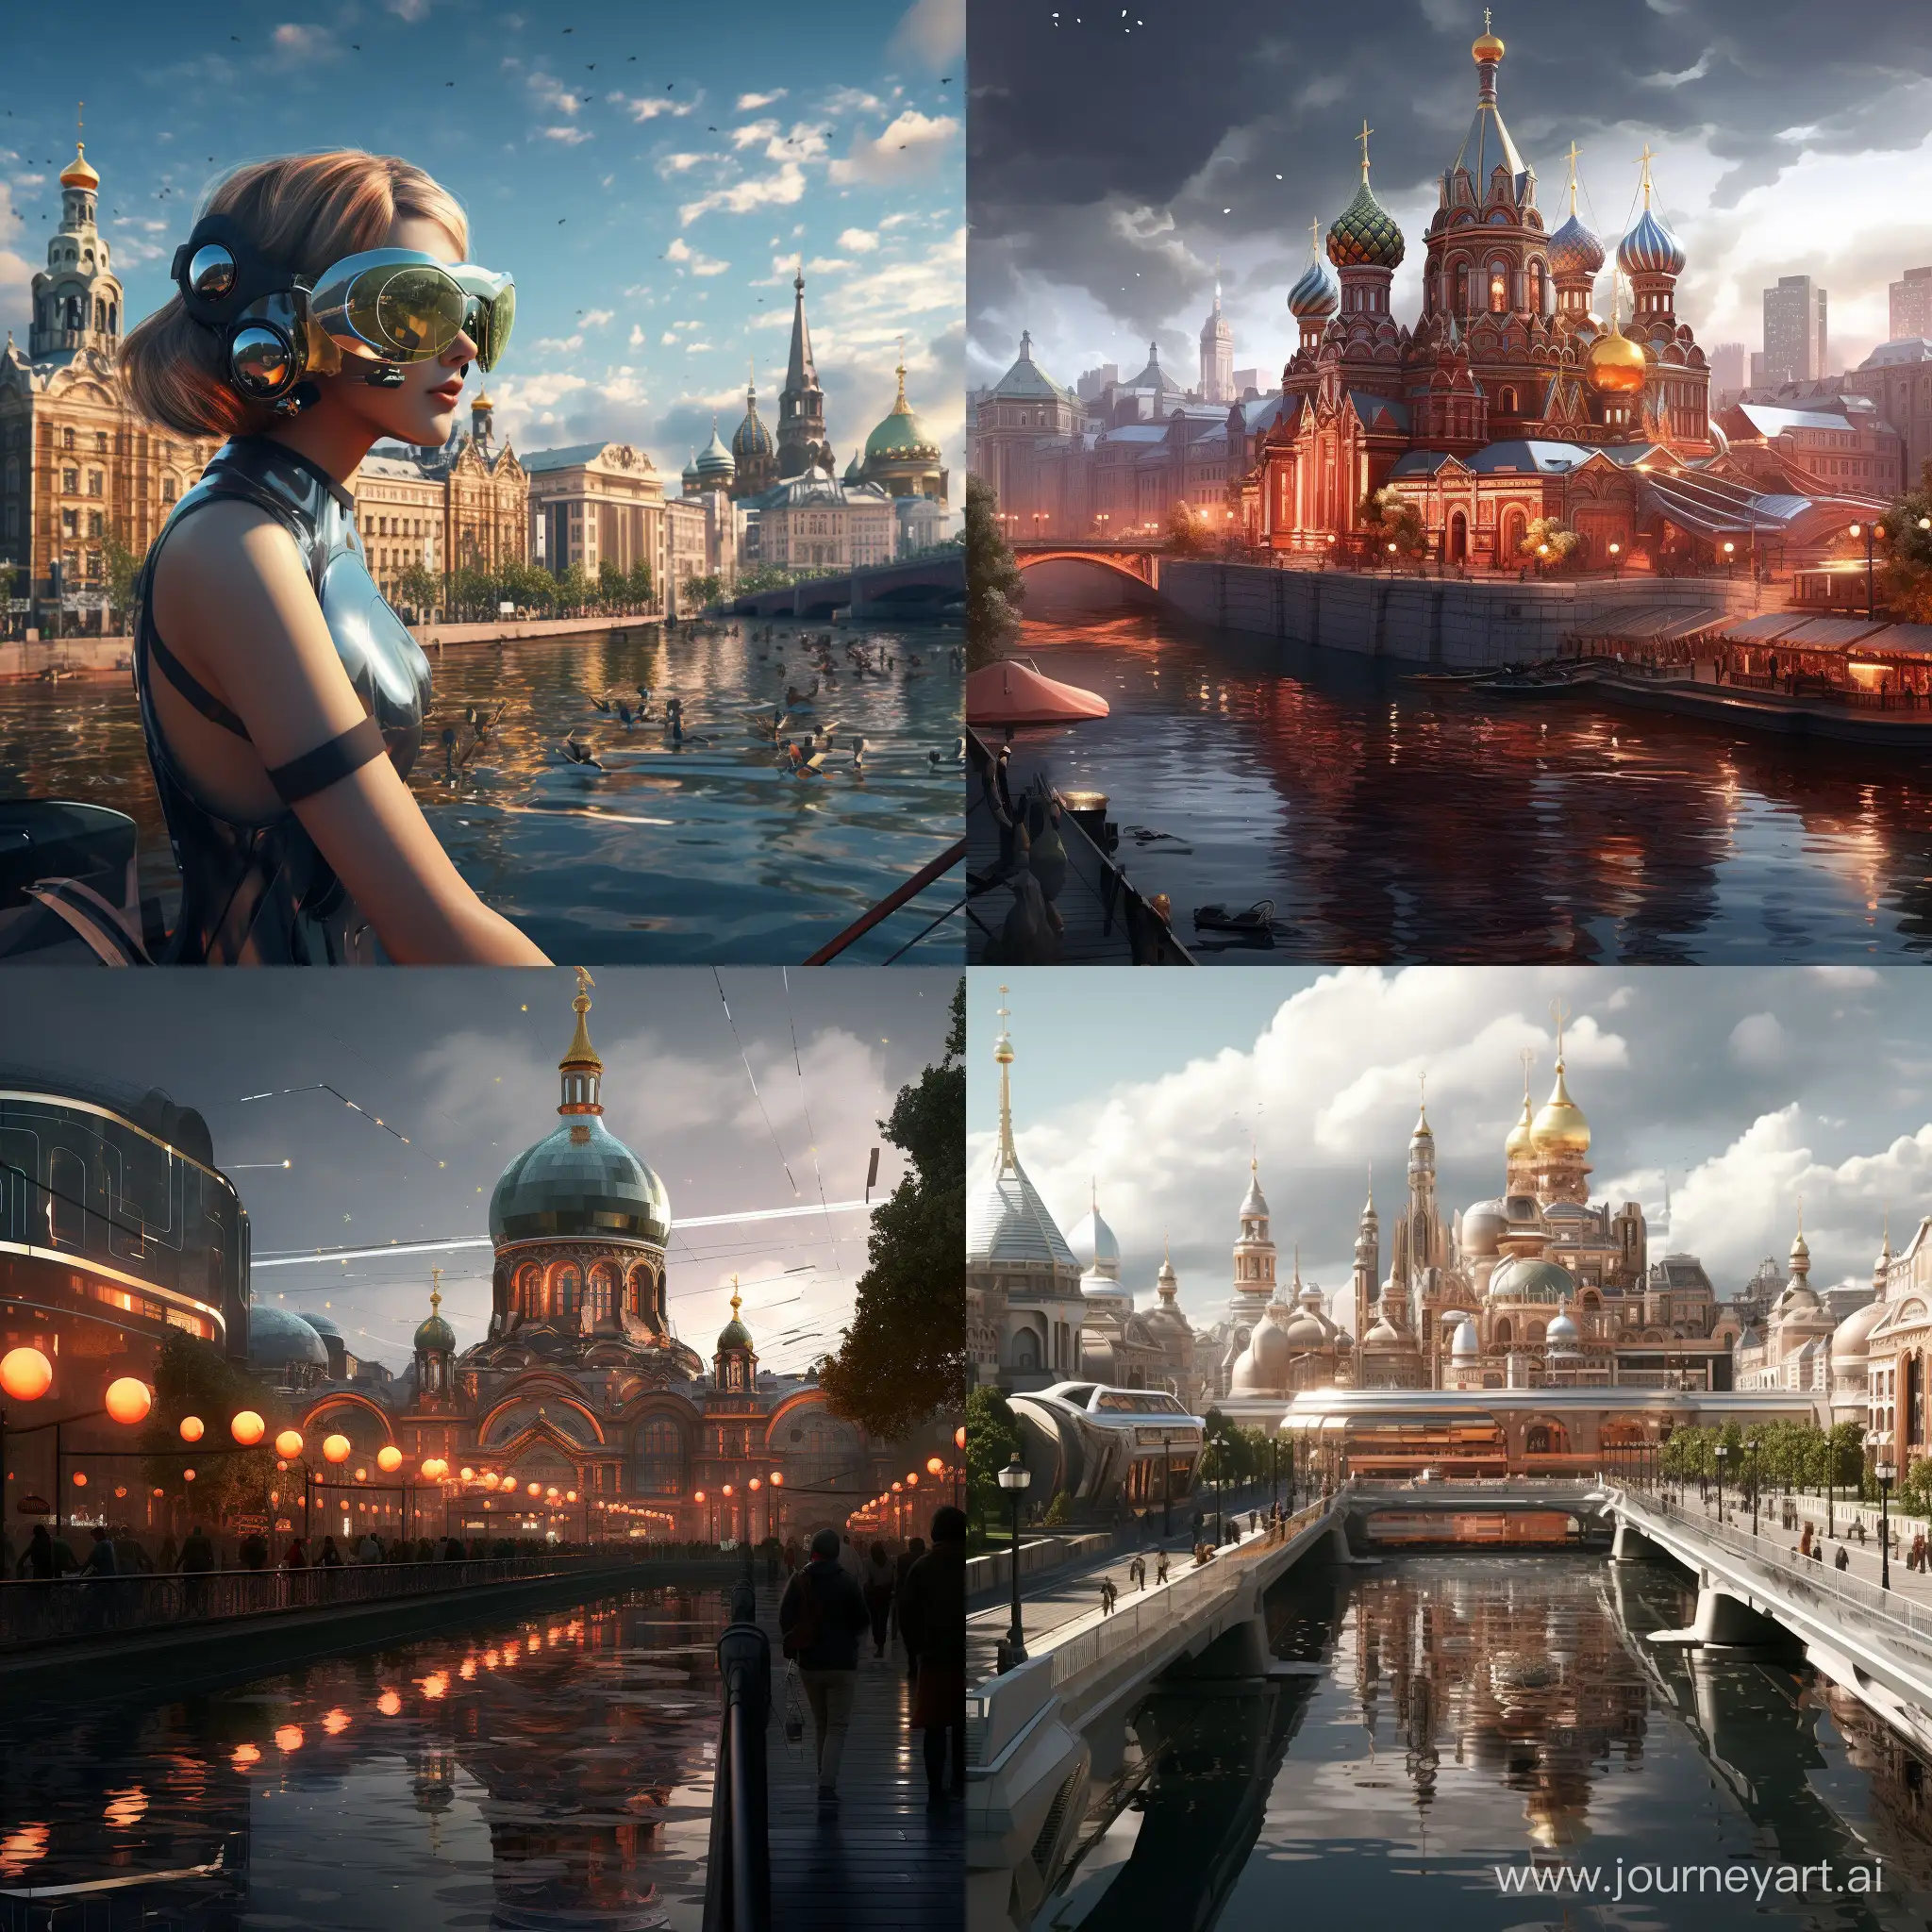 Futuristic-Saint-Petersburg-in-2020s-Style-Ultramodern-HighTech-Science-Fiction-Art